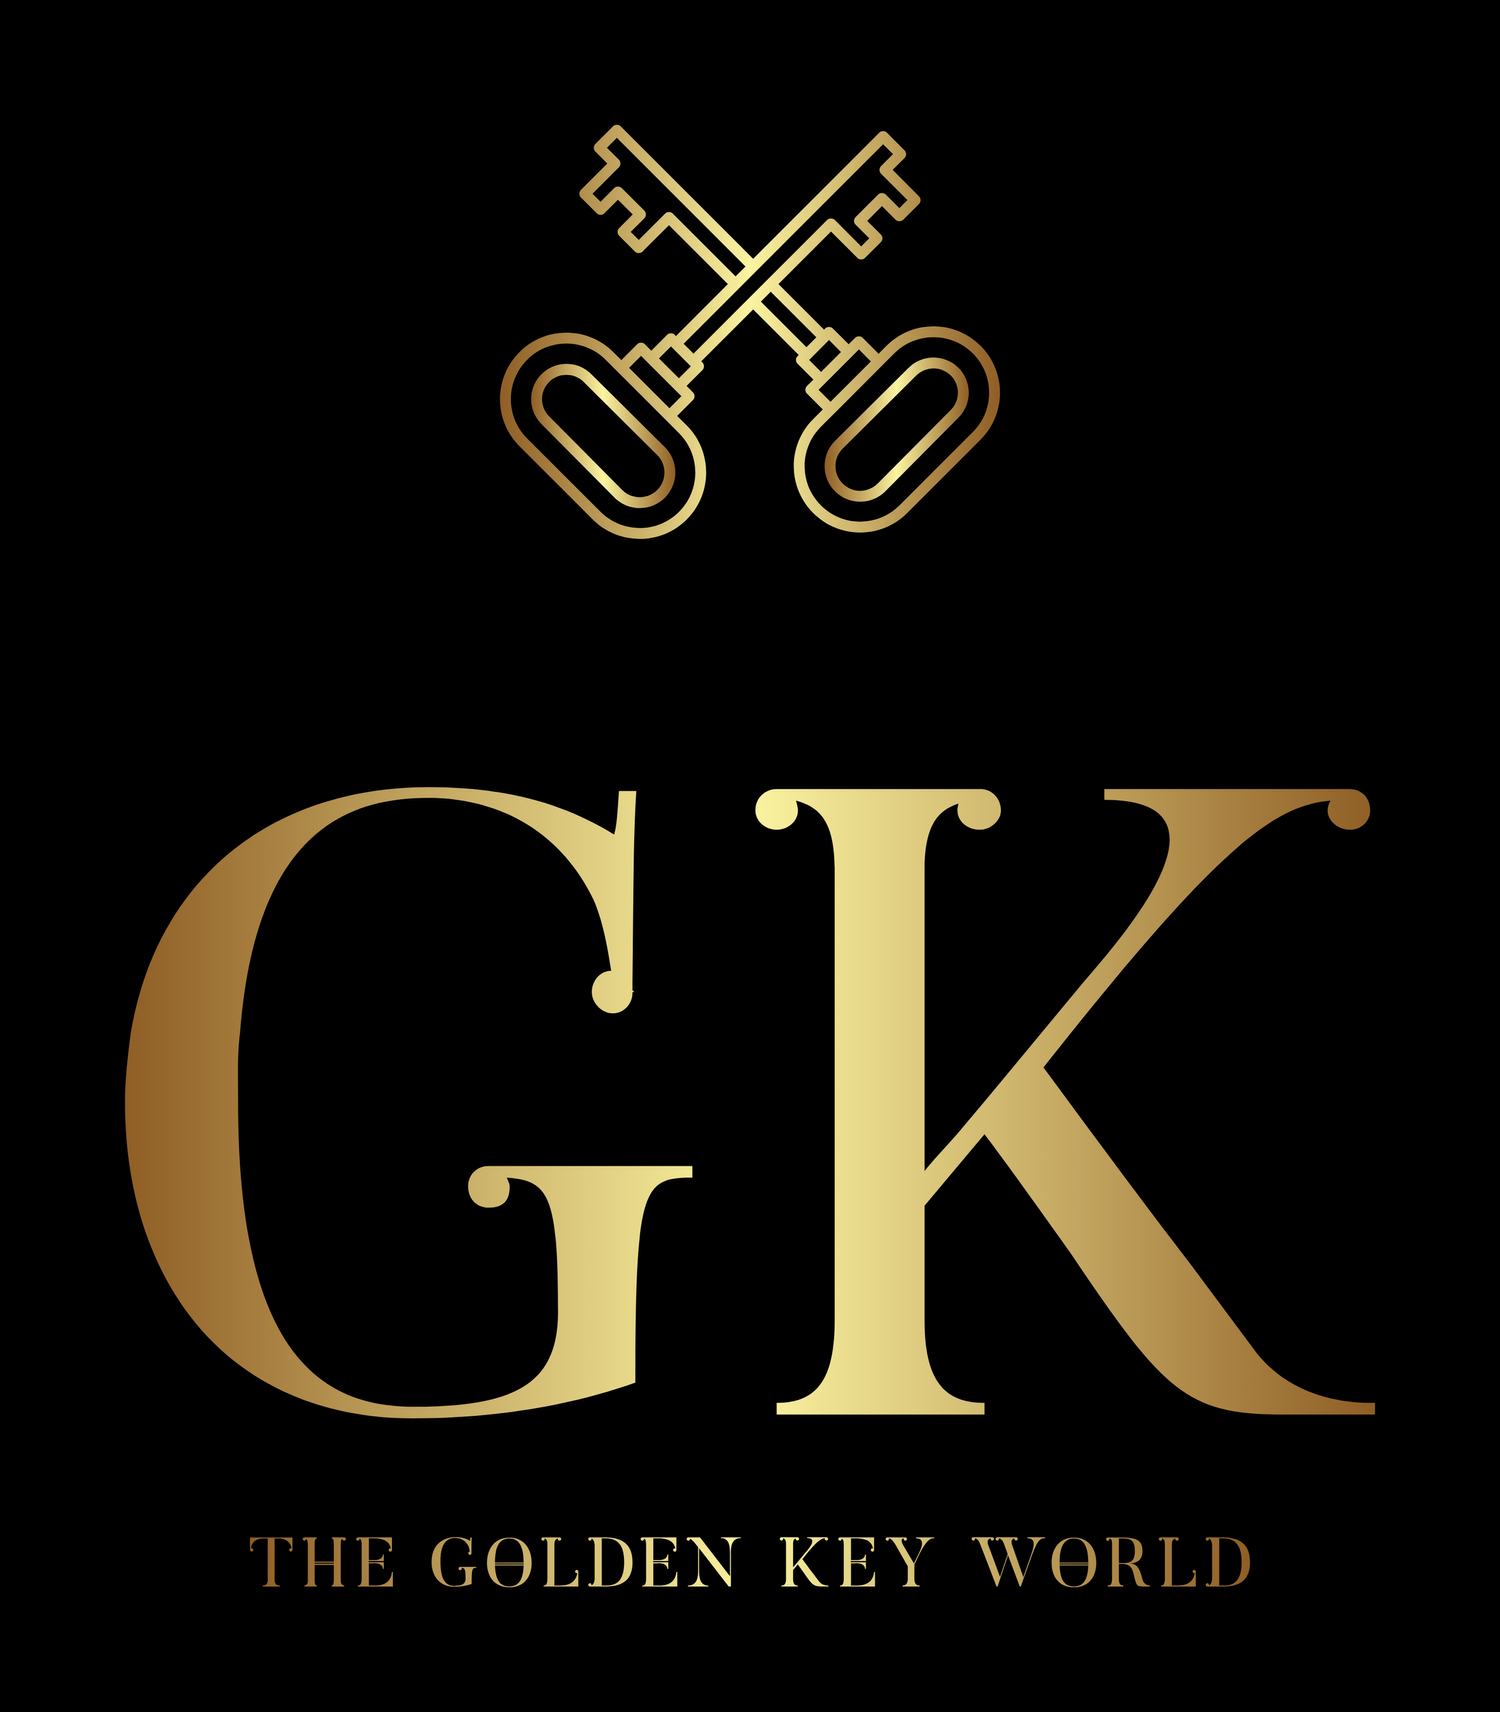 The Golden Key World